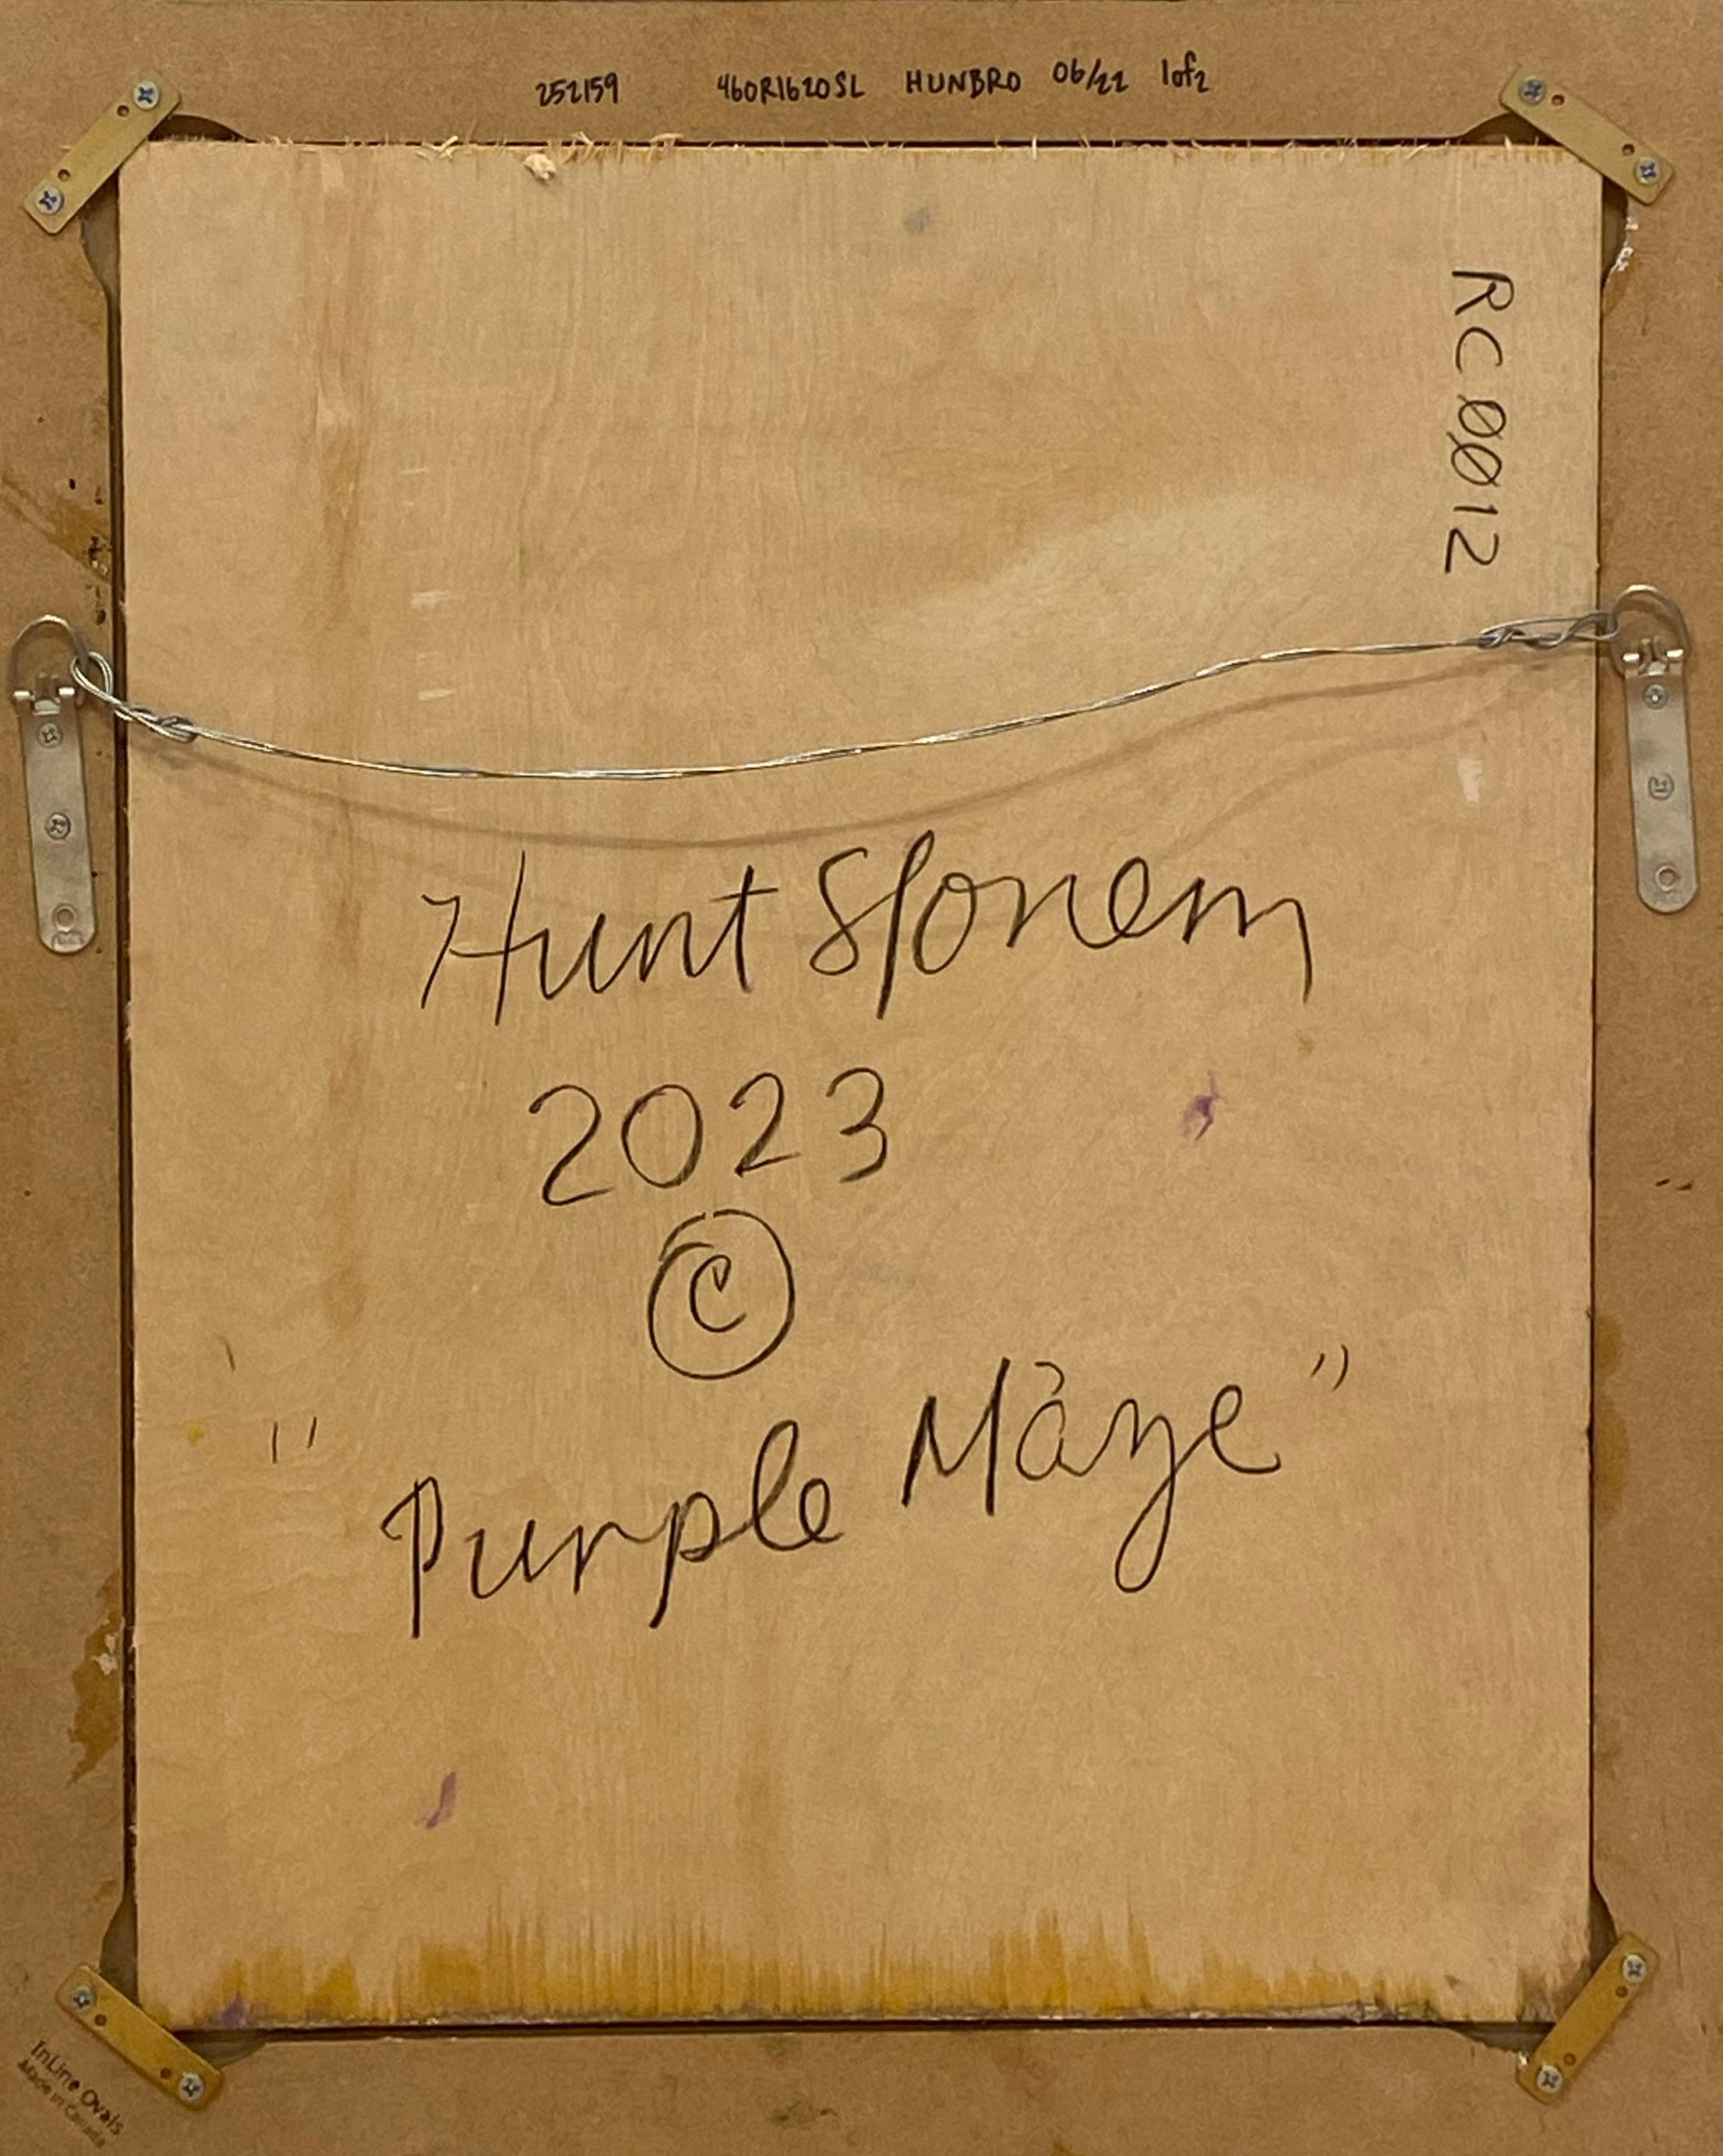 Artist:  Slonem, Hunt
Title:  Purple Maze
Date:  2023
Medium:  Oil on Wood
Unframed Dimensions:  20